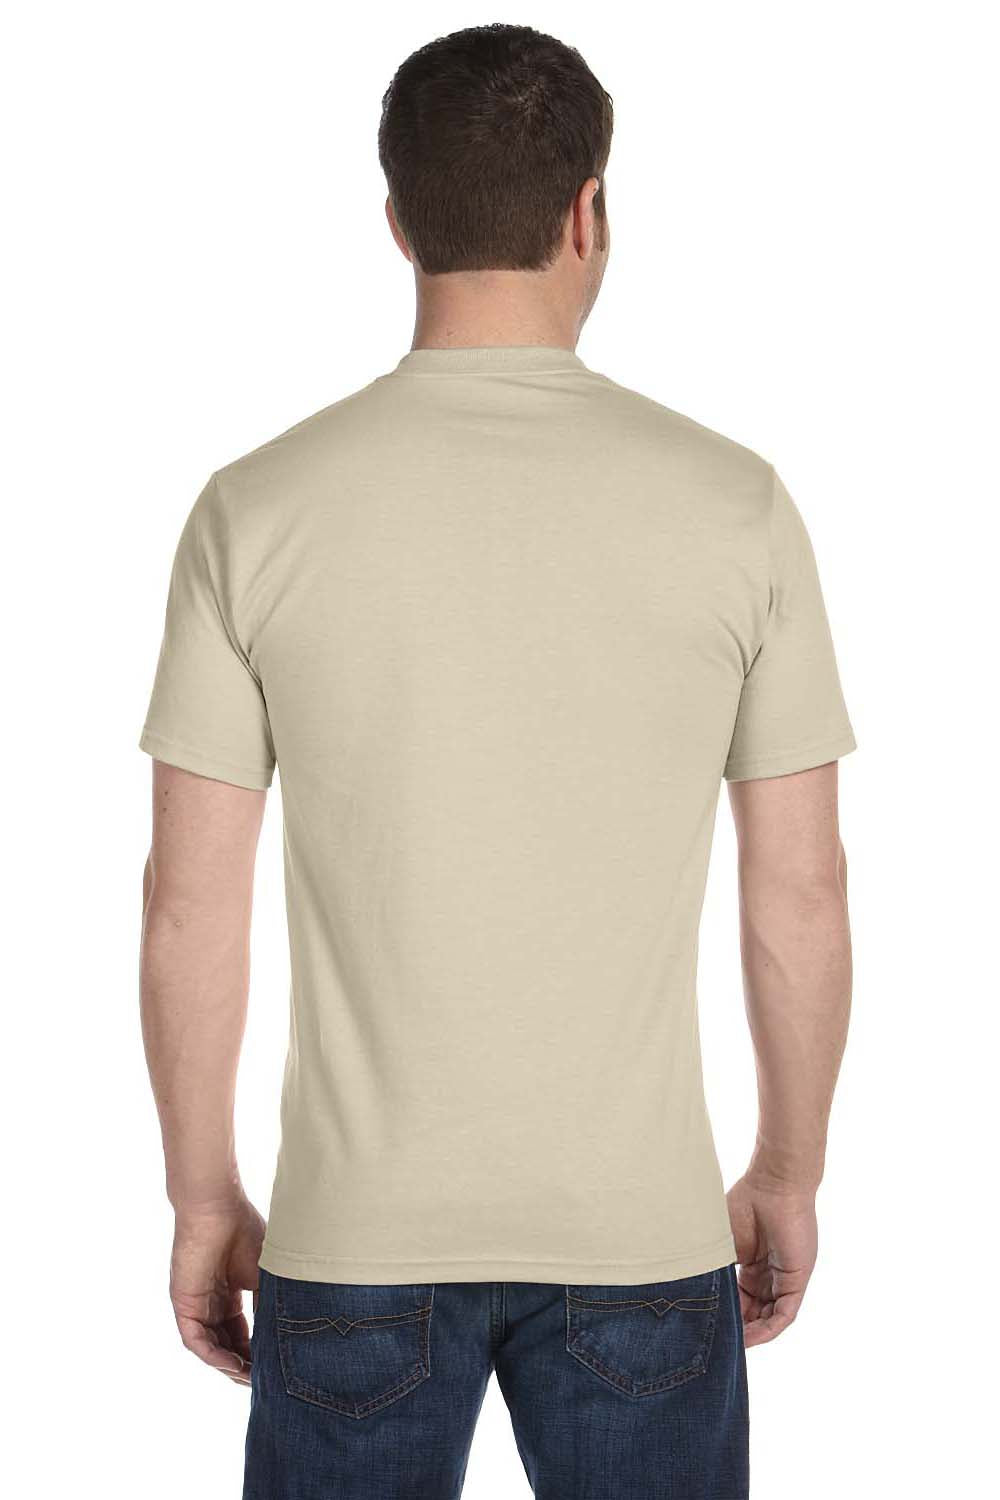 Hanes 5280 Mens ComfortSoft Short Sleeve Crewneck T-Shirt Sand Brown Back